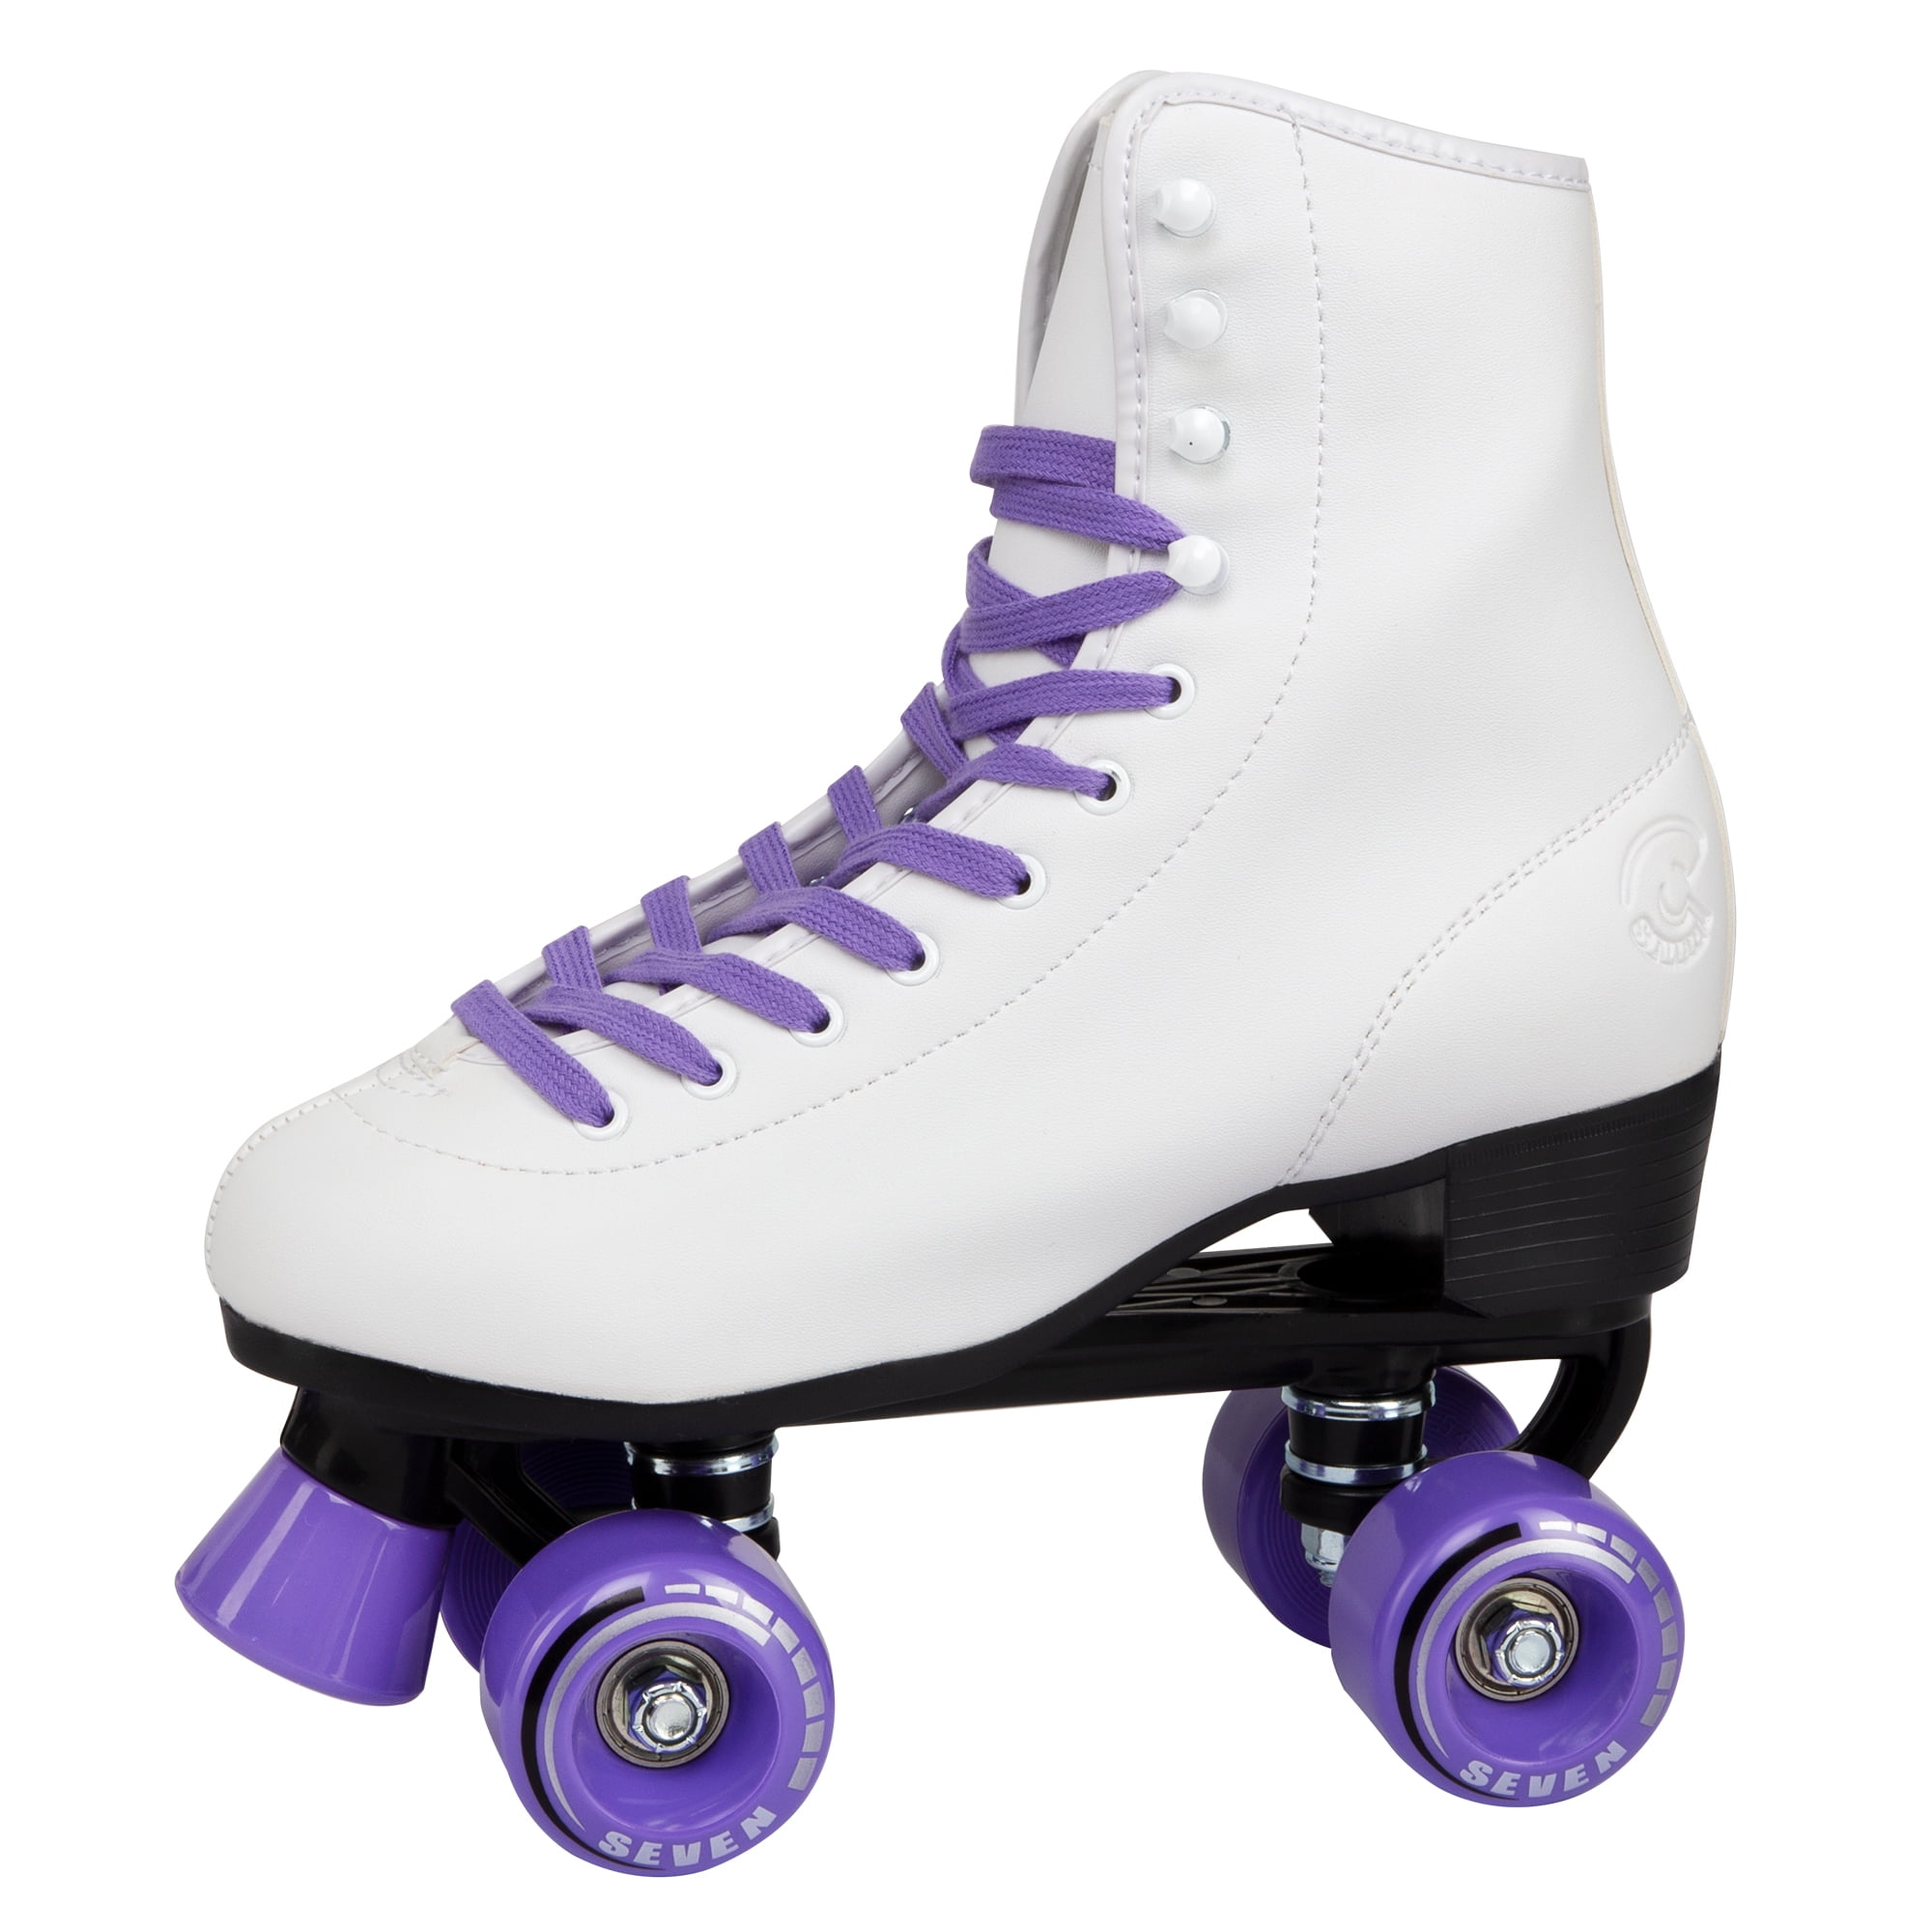 Details about   Quad RollerSkates Purple Flower for Women Size 5 Adult 4-Wheels 